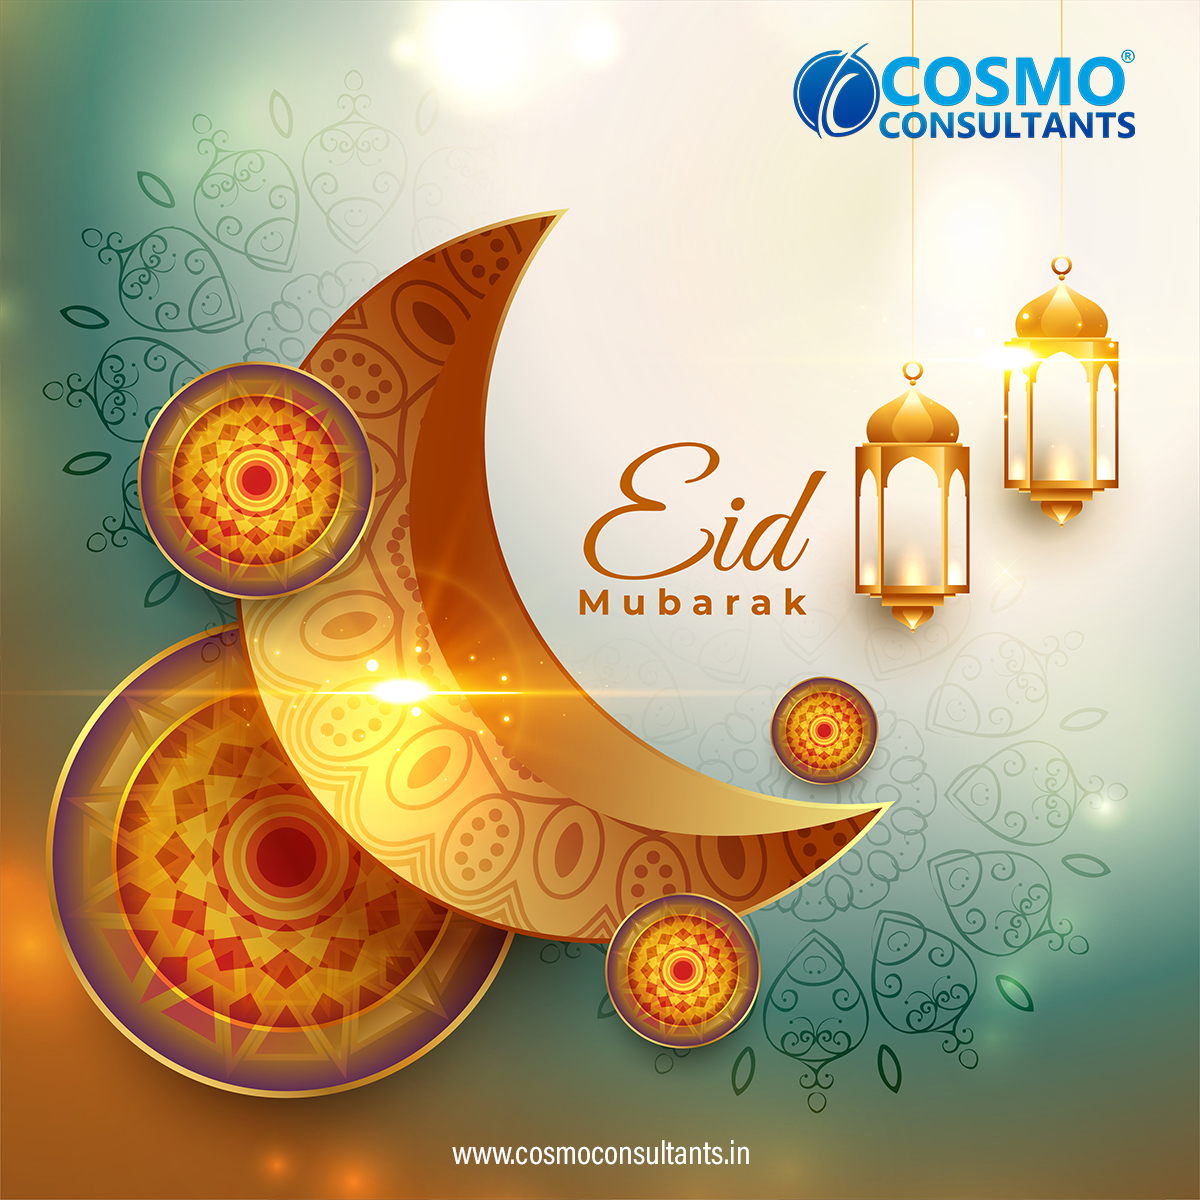 Happy Eid!
May your day be filled with lots of joy and happiness.

#CosmoConsultants #Eid #HappyEid #Eid2024 #eidmubarak